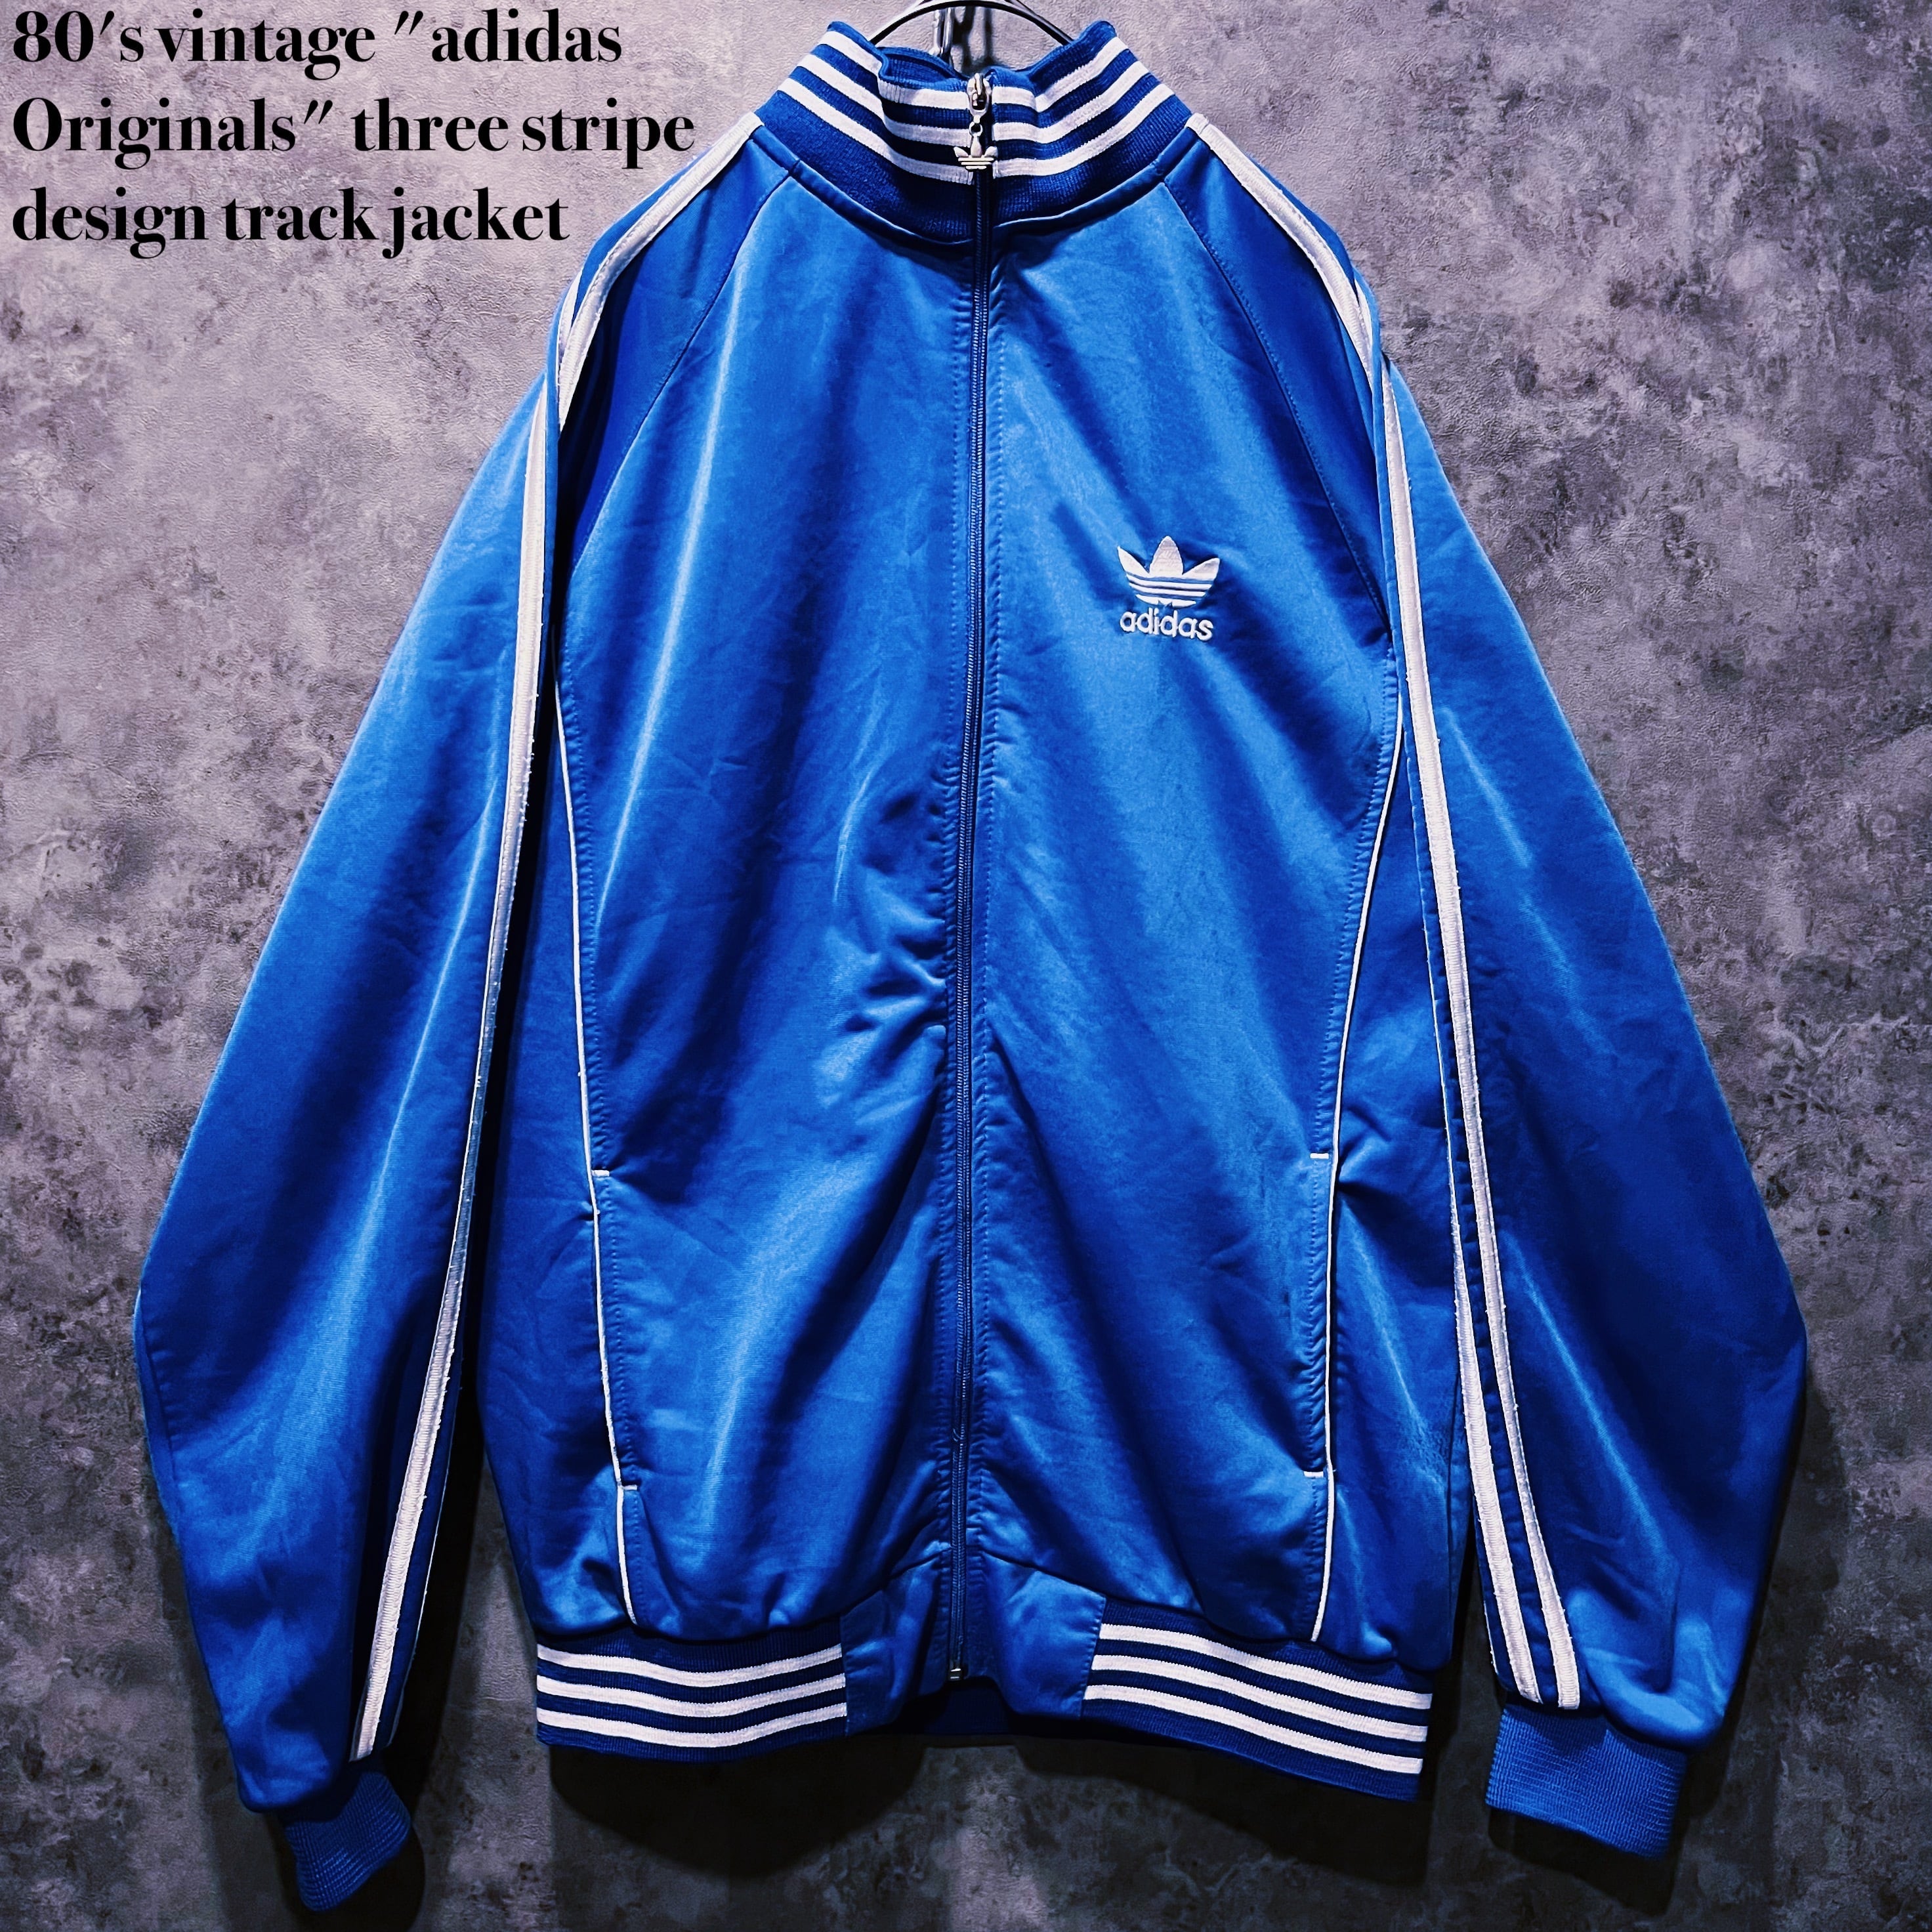 haj MP Blandet doppio】80's vintage "adidas Originals" three stripe design track jacket |  ayne